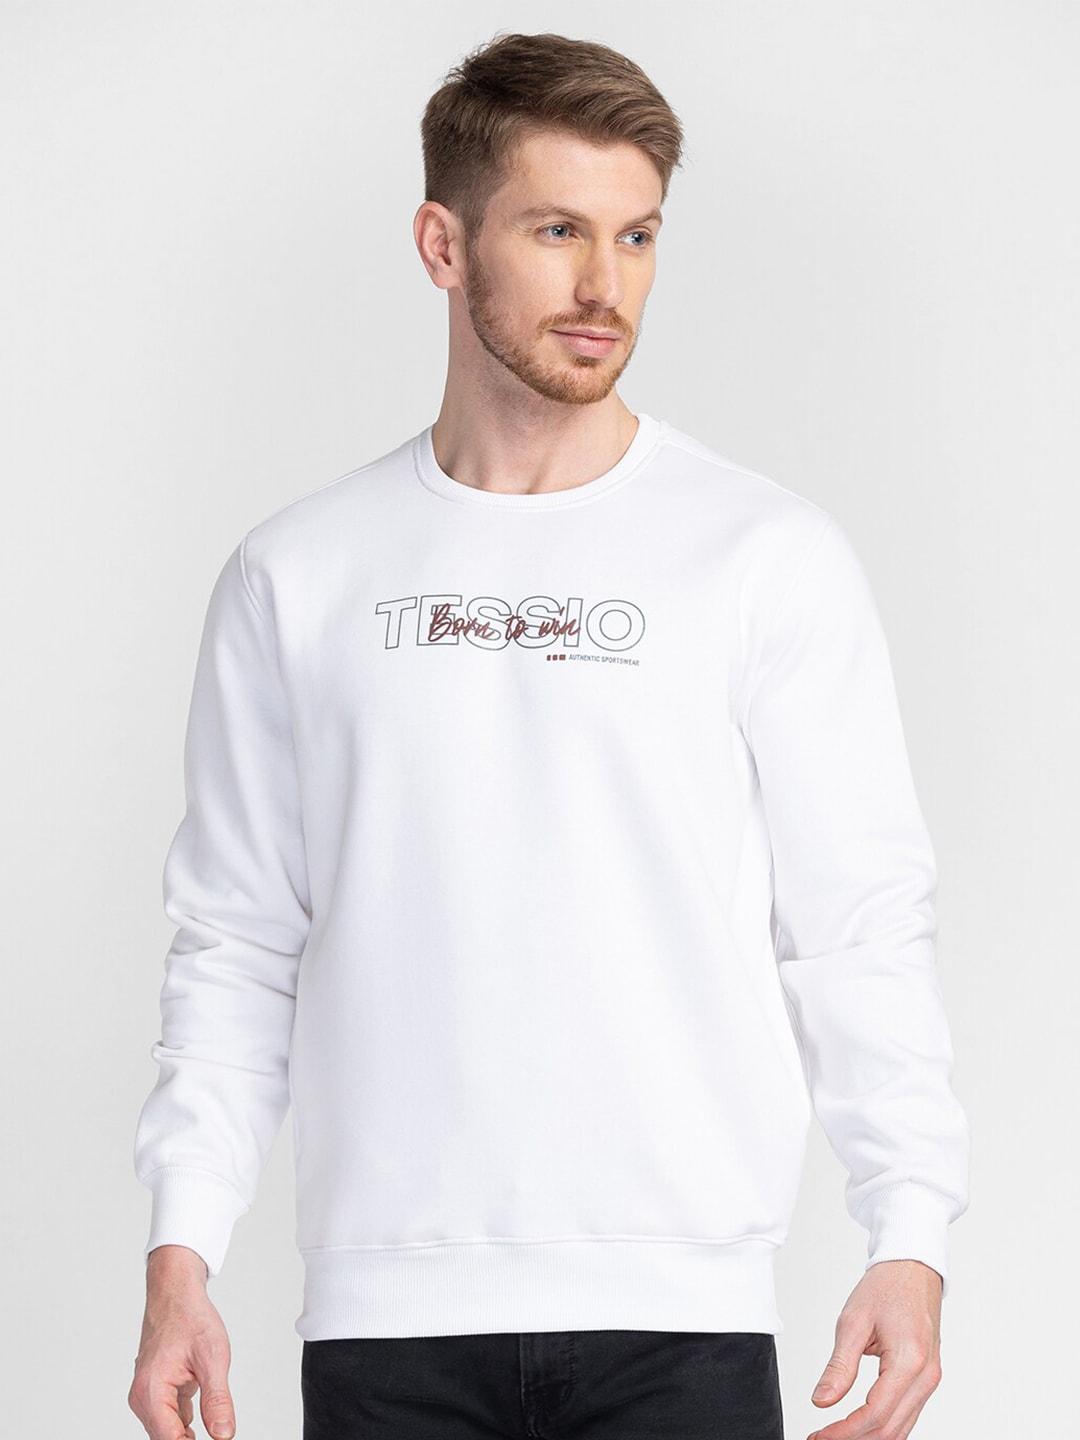 tessio-men-white-sweatshirt